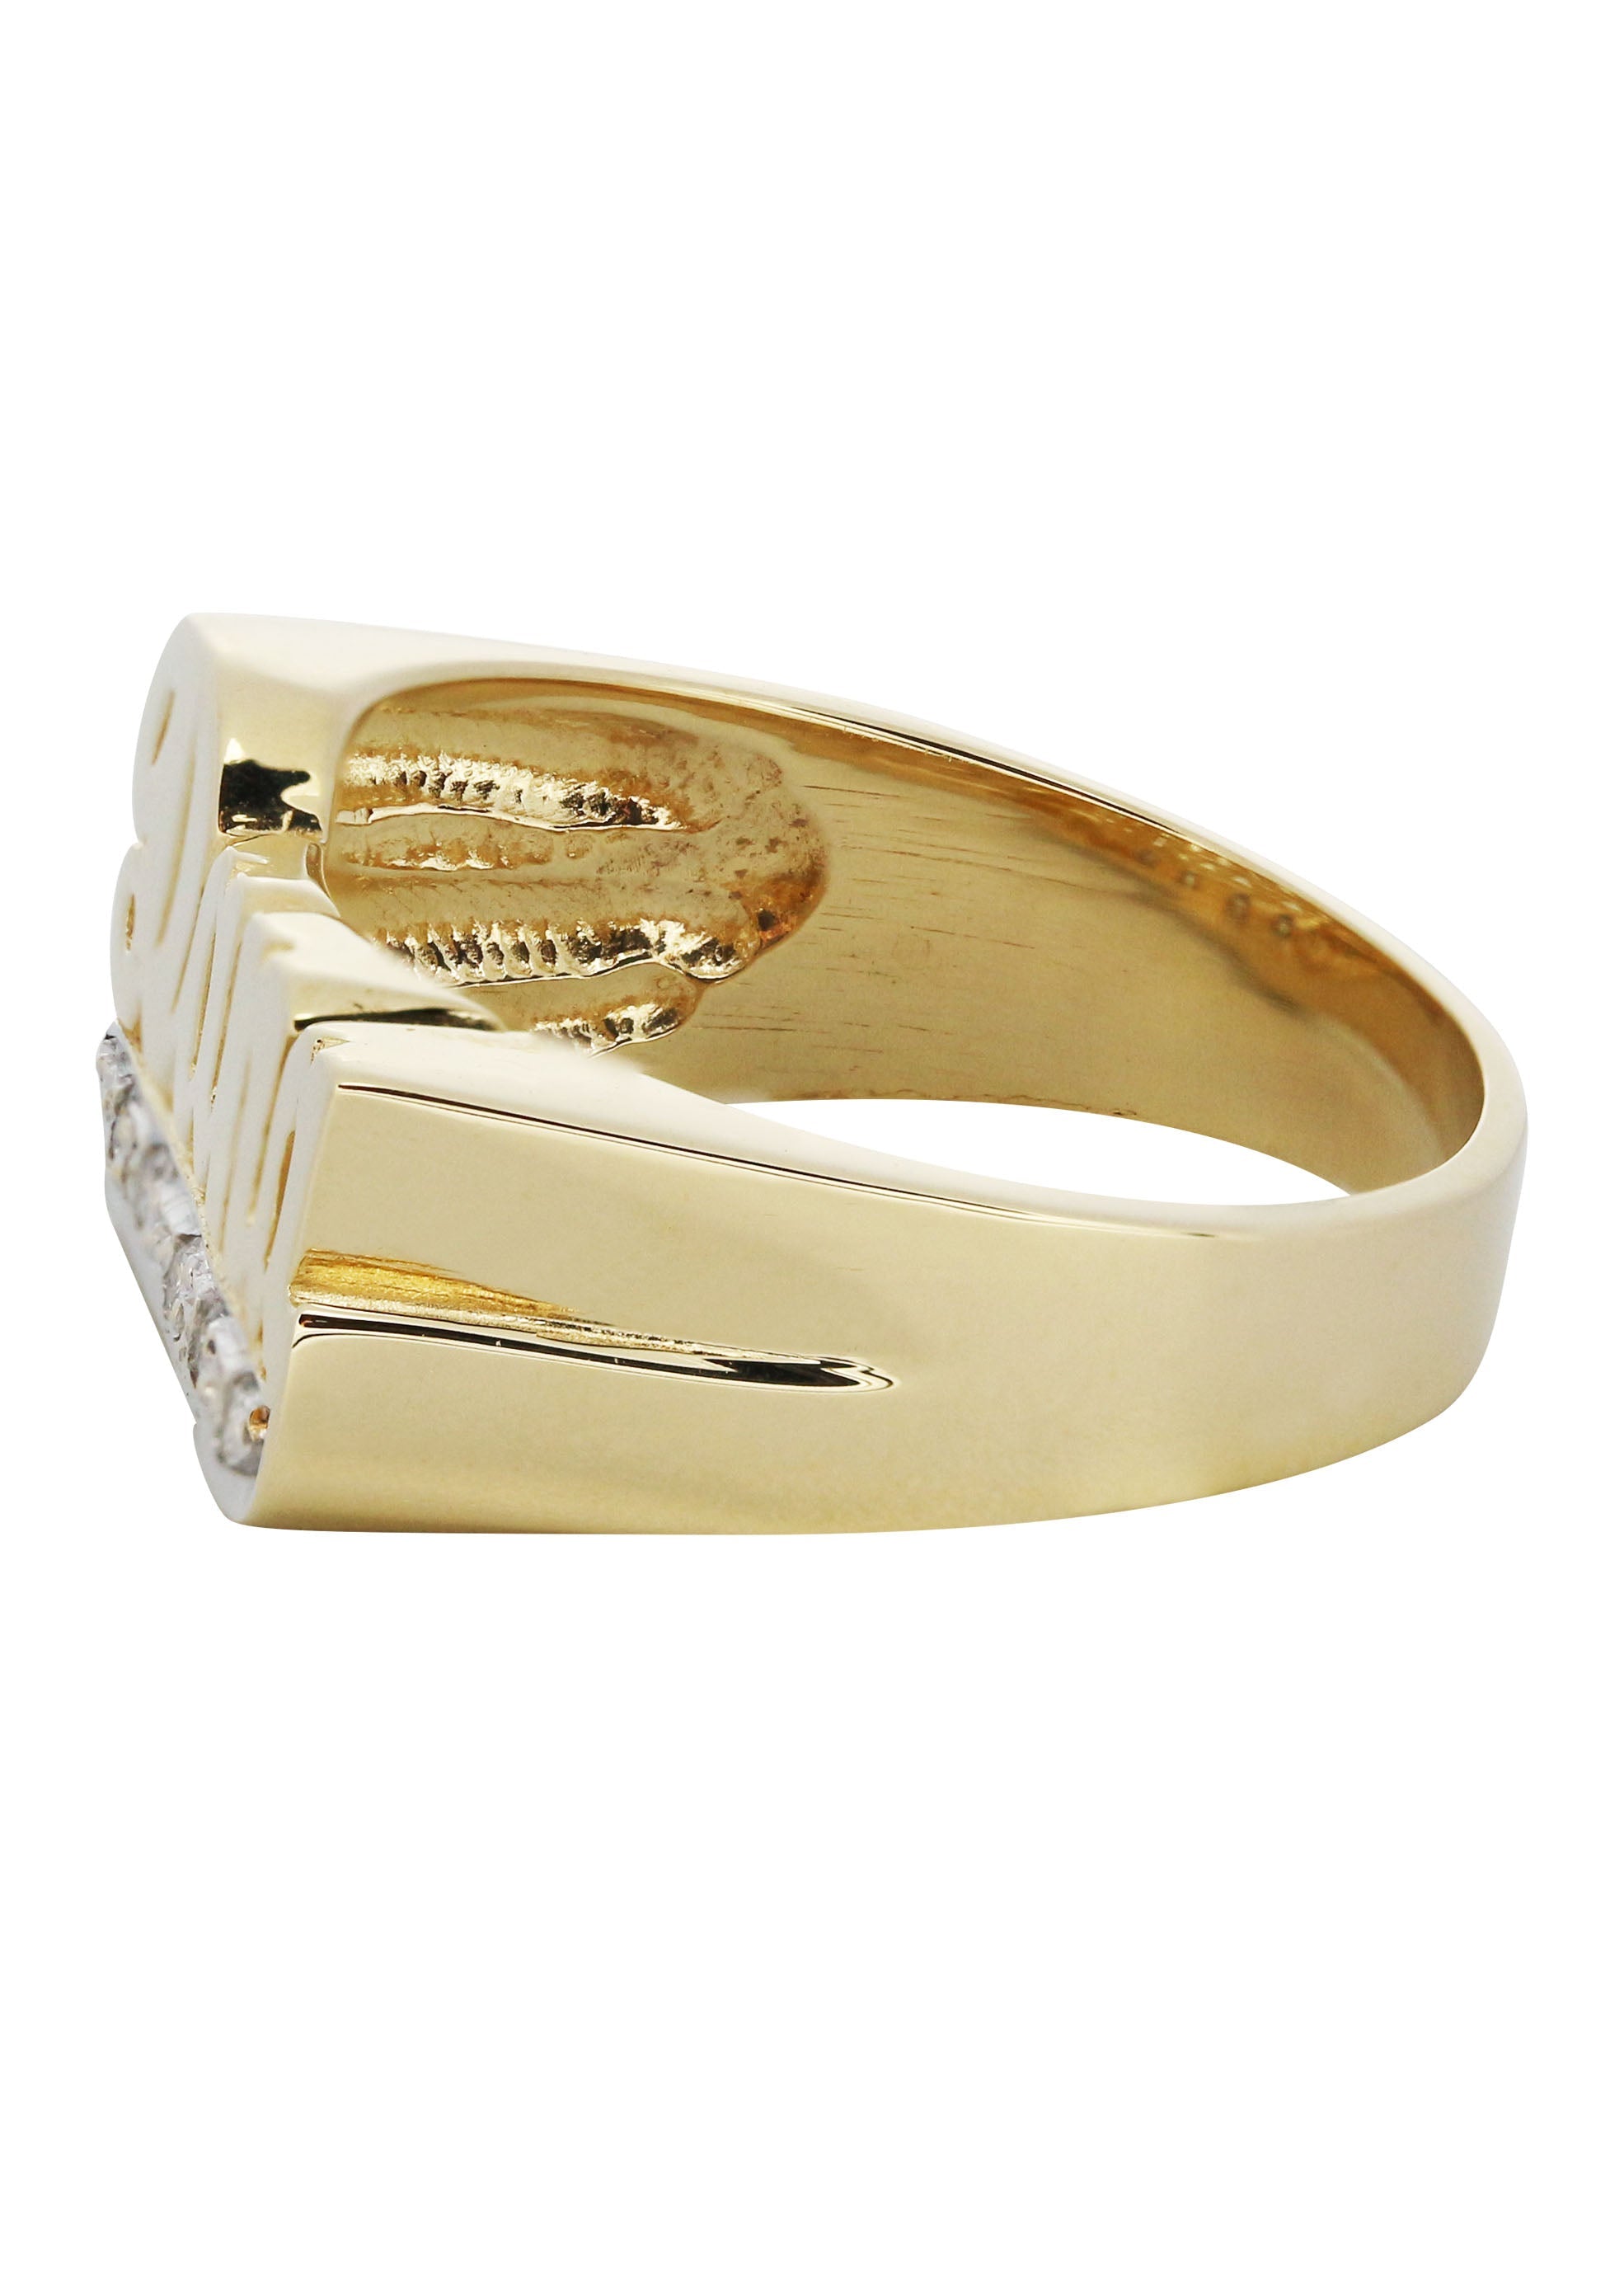 Name ring | Gold finger rings, Mens gold rings, Gold ring designs